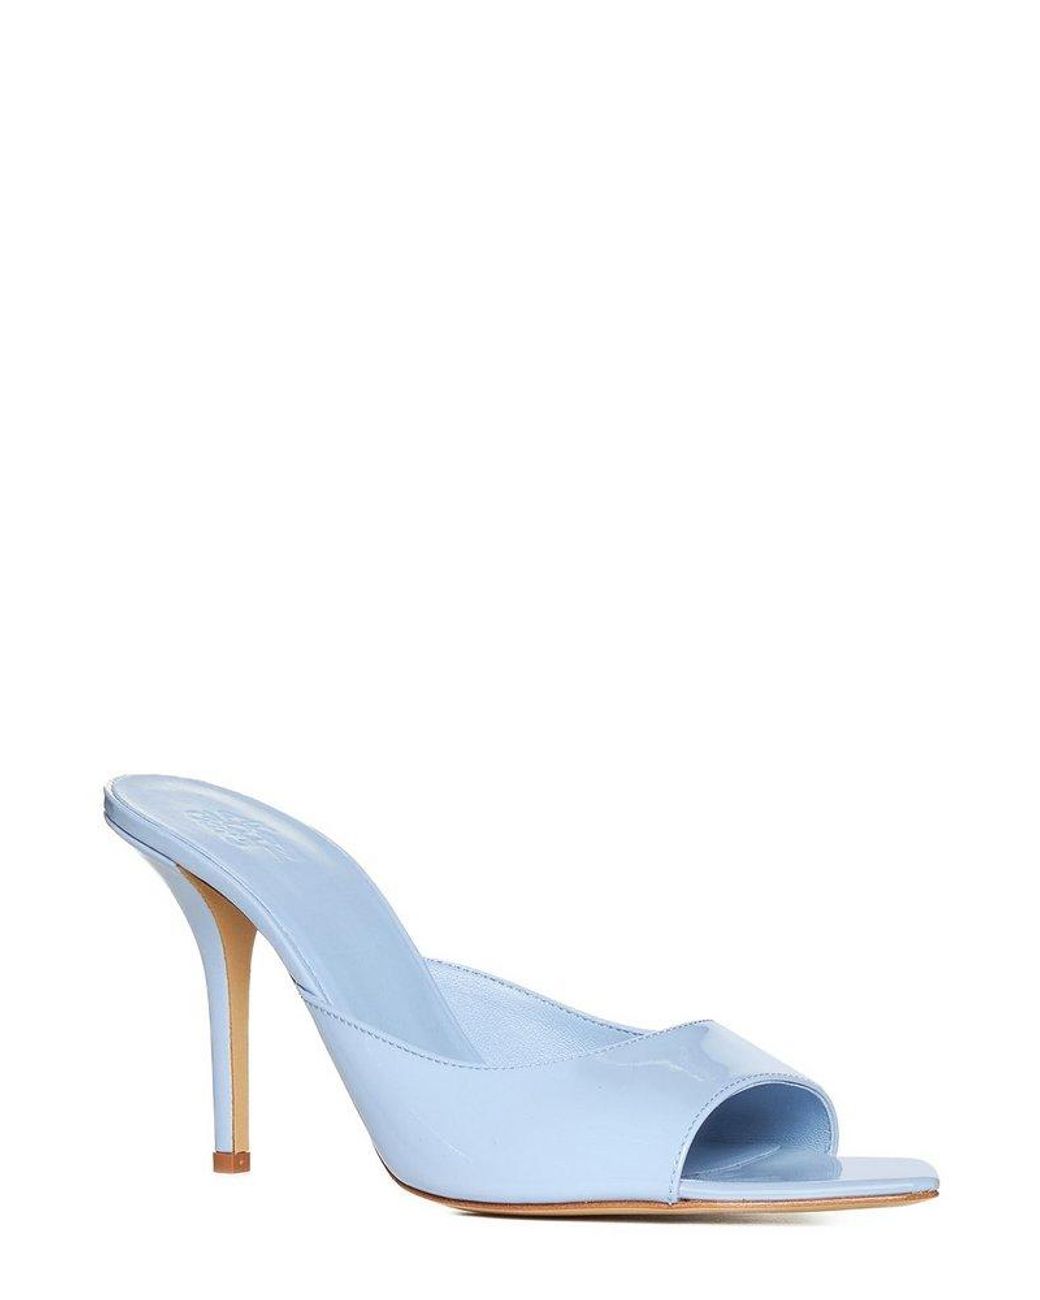 Gia Borghini X Pernille Teisbaek Perni 04 Sandals in Blue | Lyst